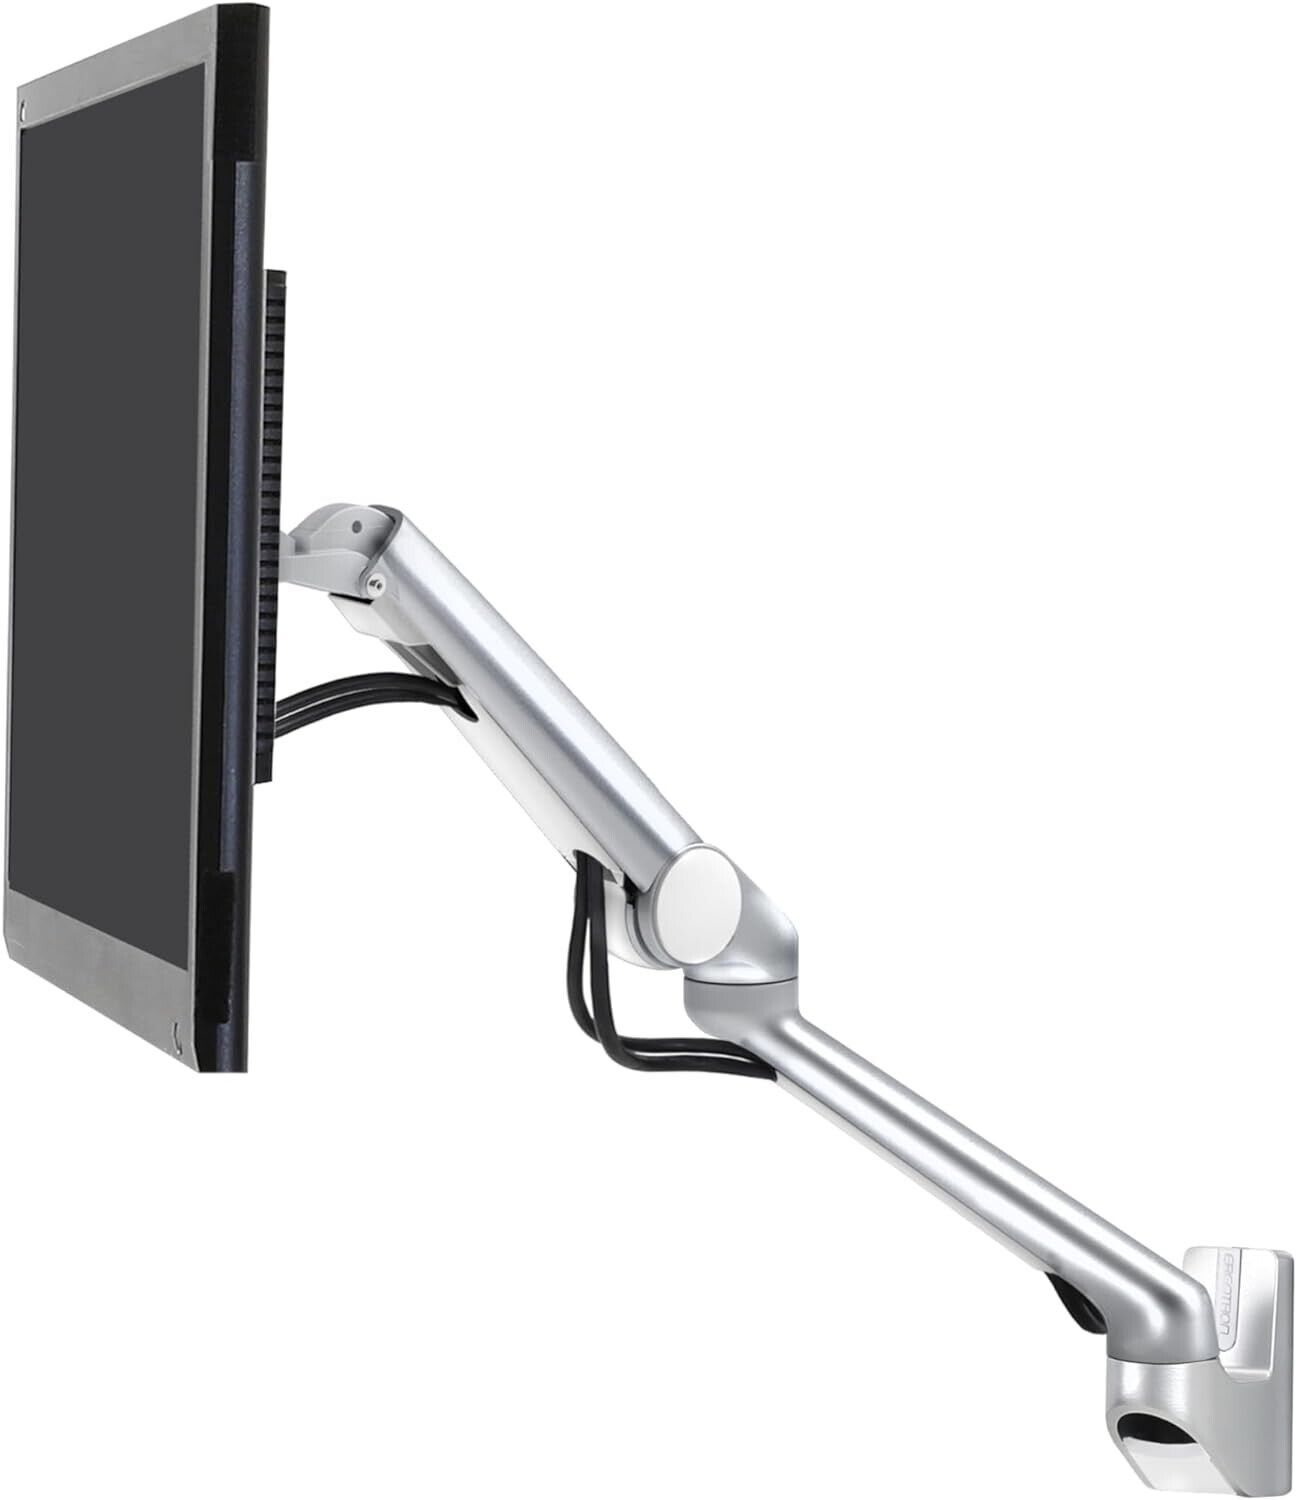 Ergotron MX Mini Single Monitor Arm, VESA Wall Mount for Monitors Up to 24 Inch